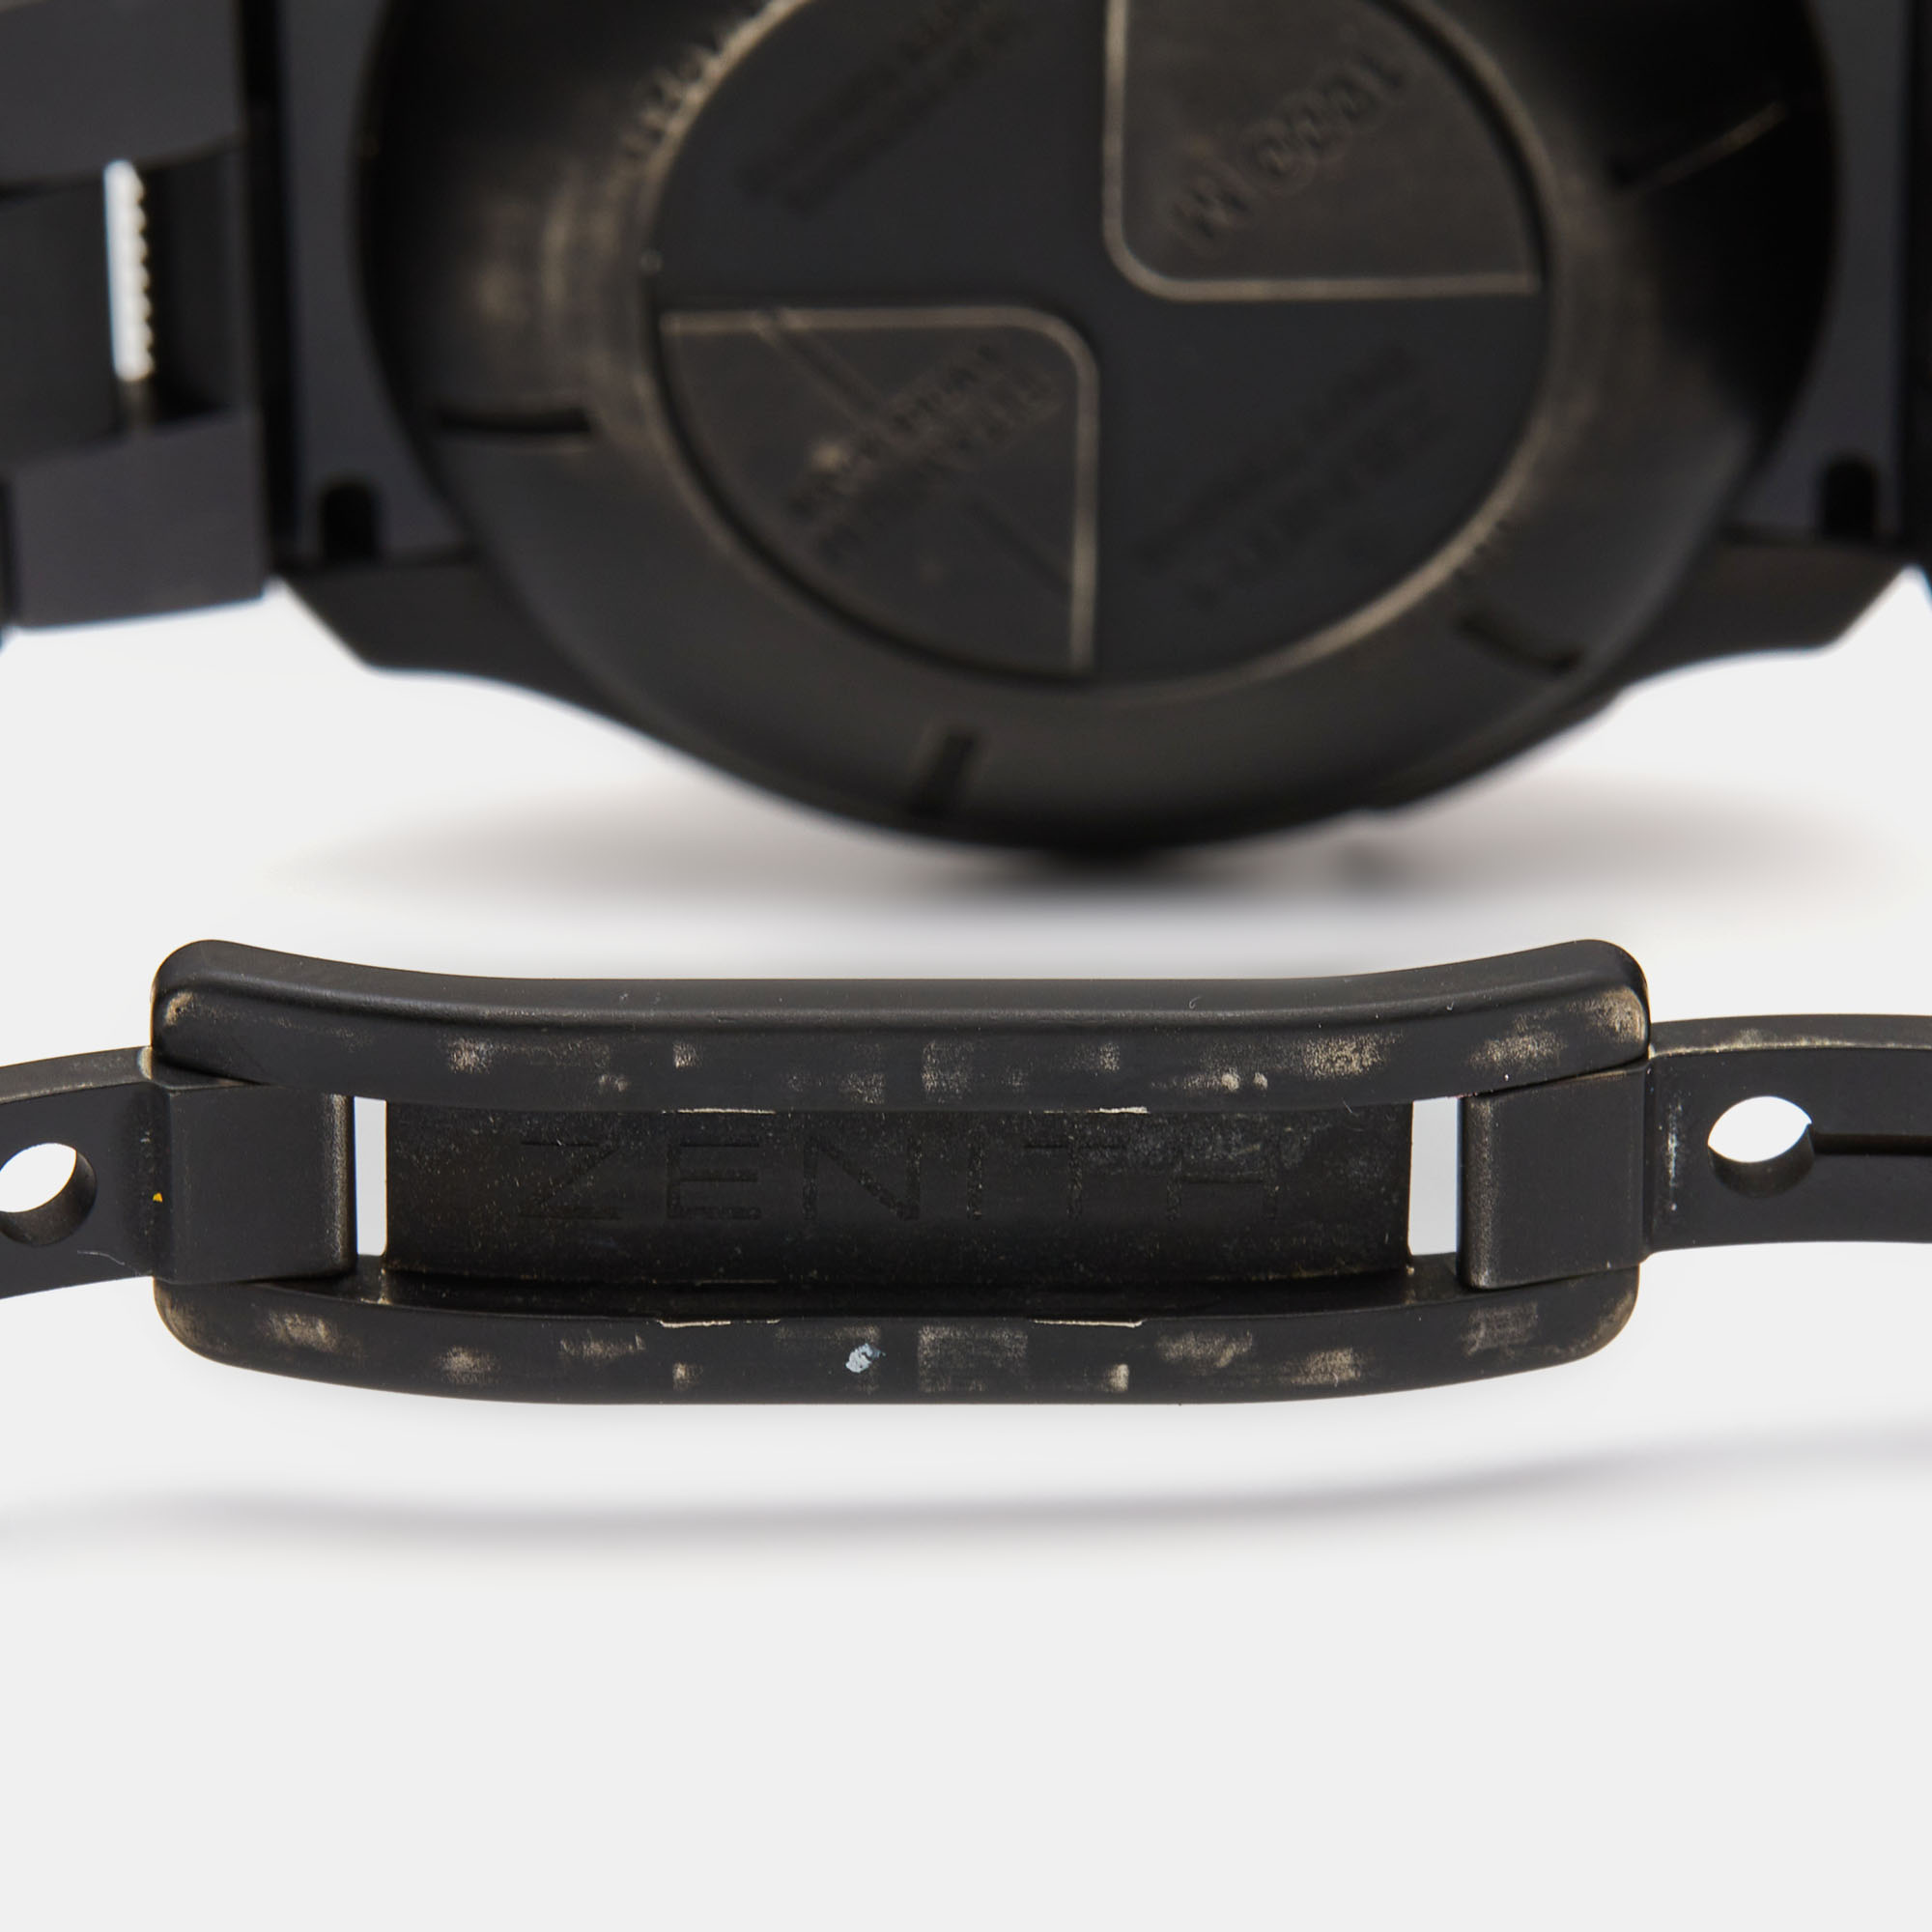 Zenith Black Titanium Defy Xtreme Stealth Limited Edition 96.0527.4021/22.M529 Men's Wristwatch 46 Mm